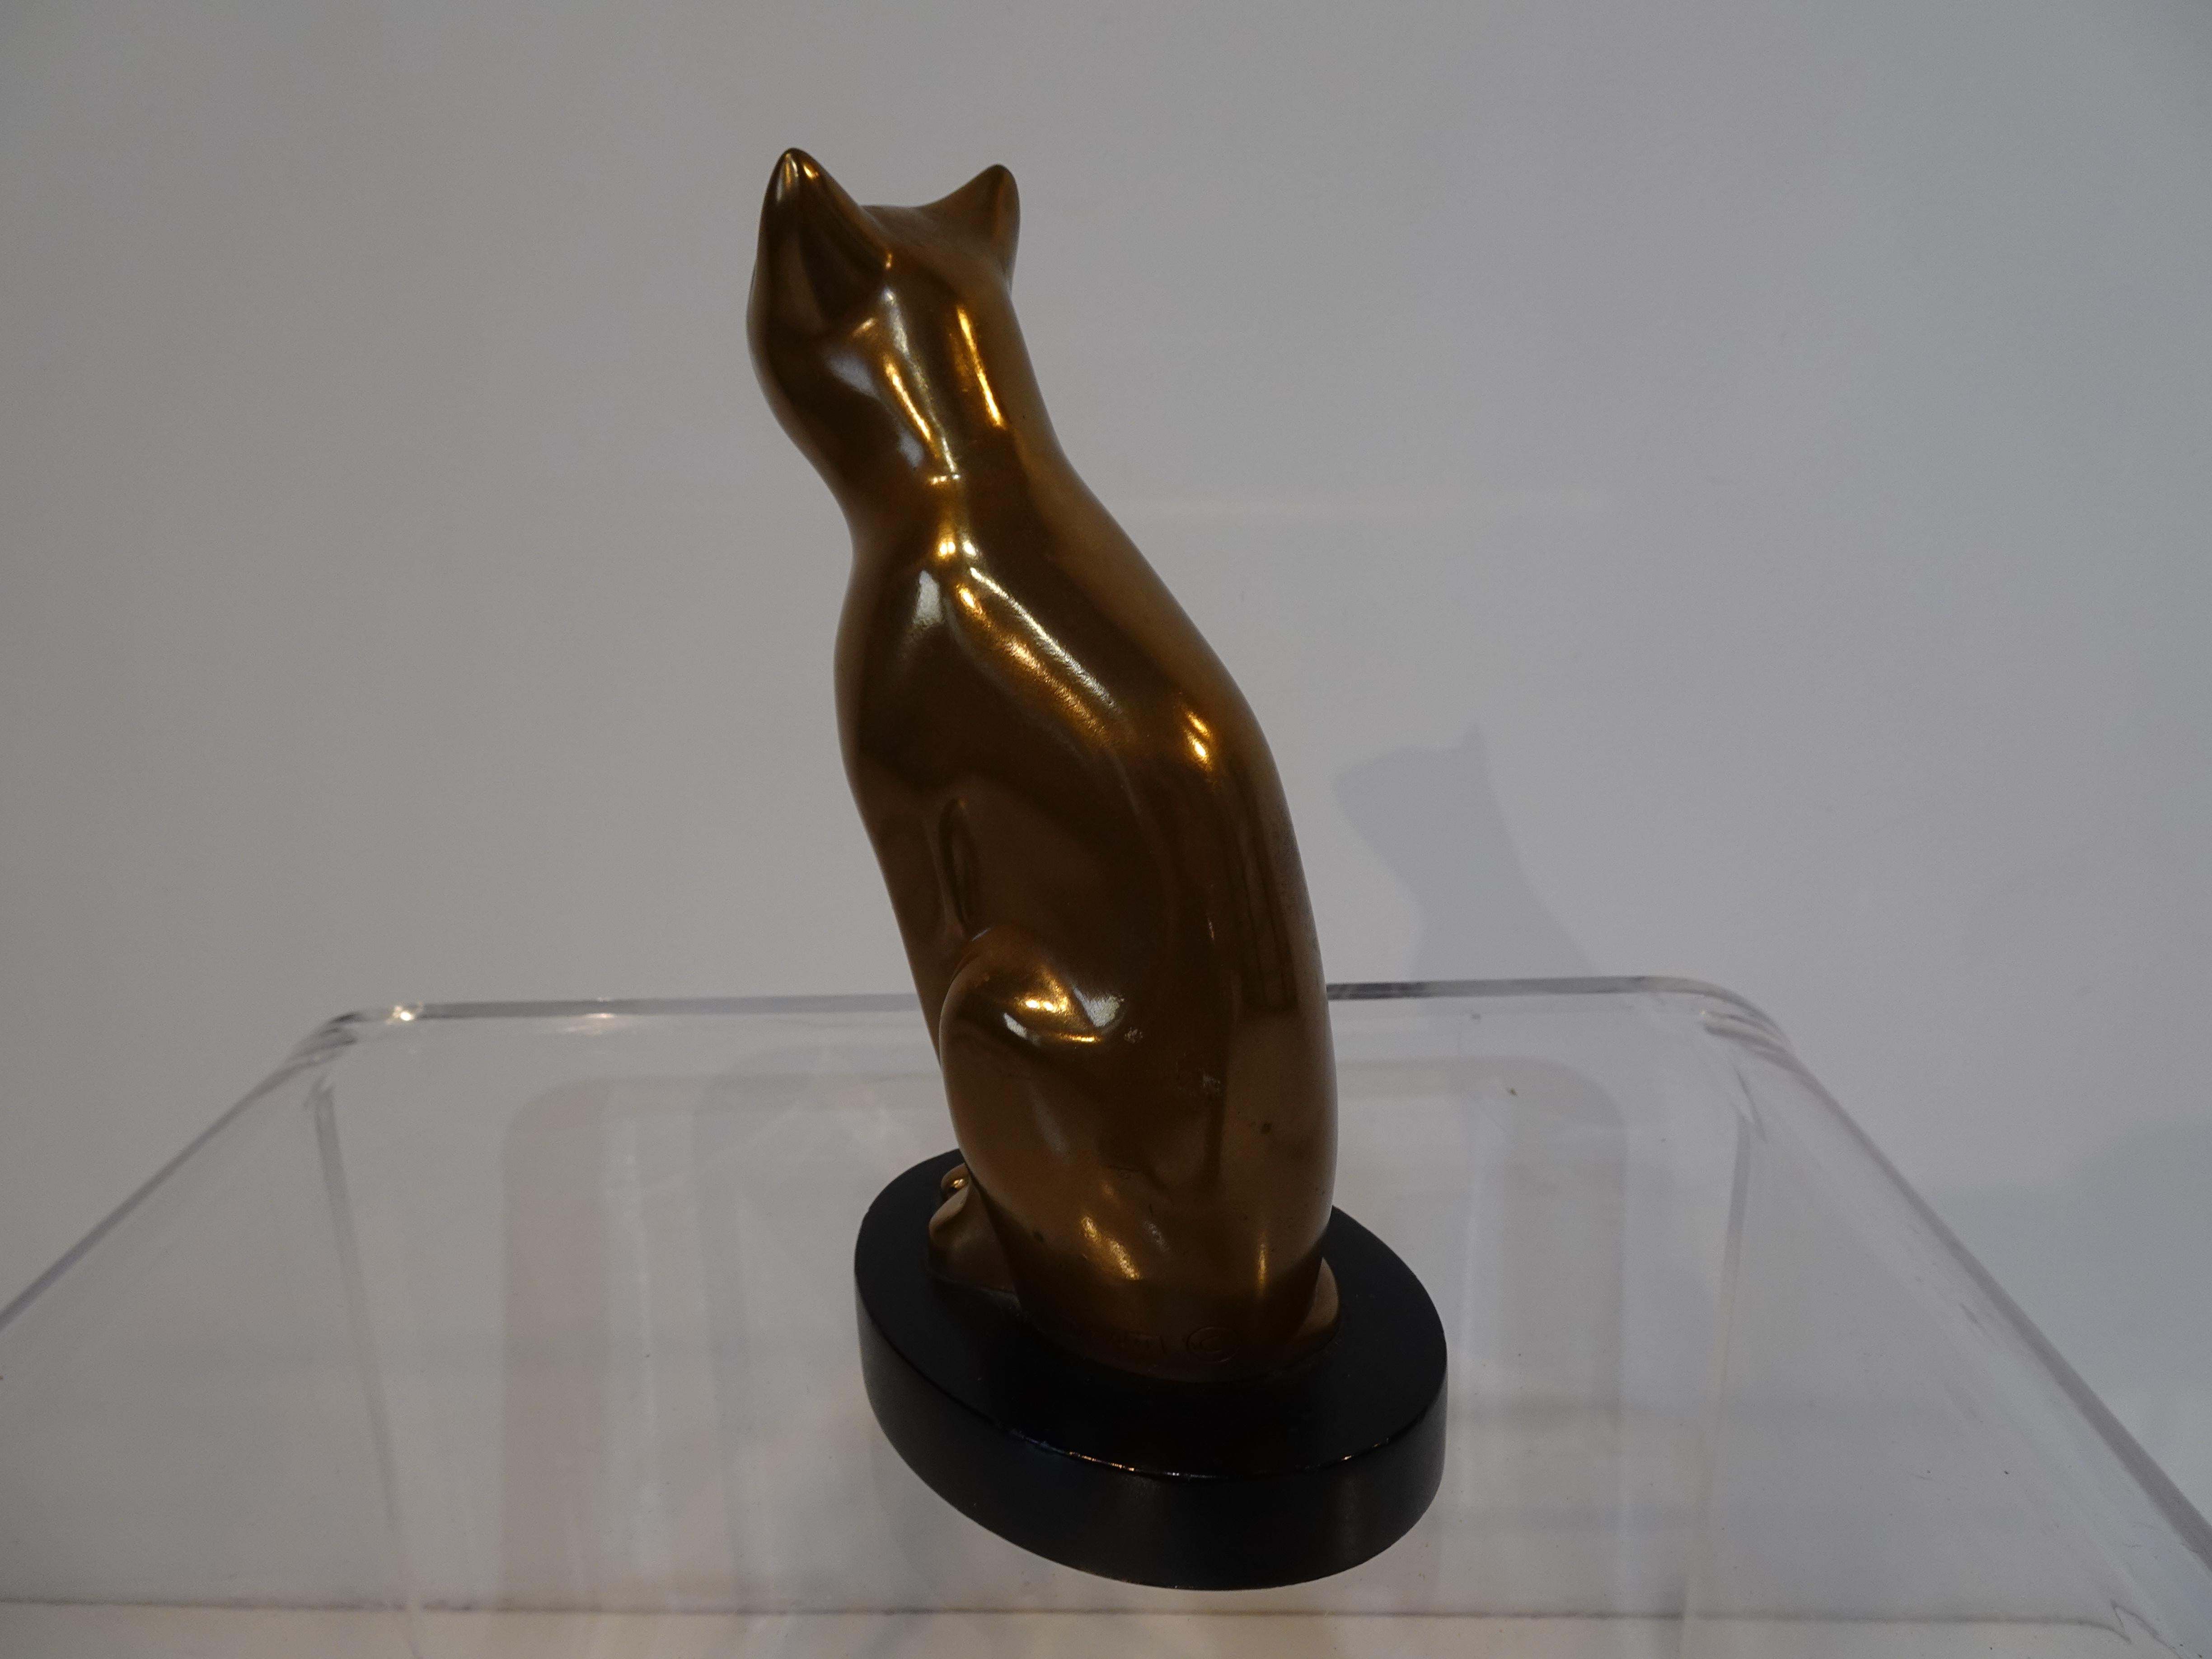 American Cast Brass Cat Sculpture by Dewitt For Sale